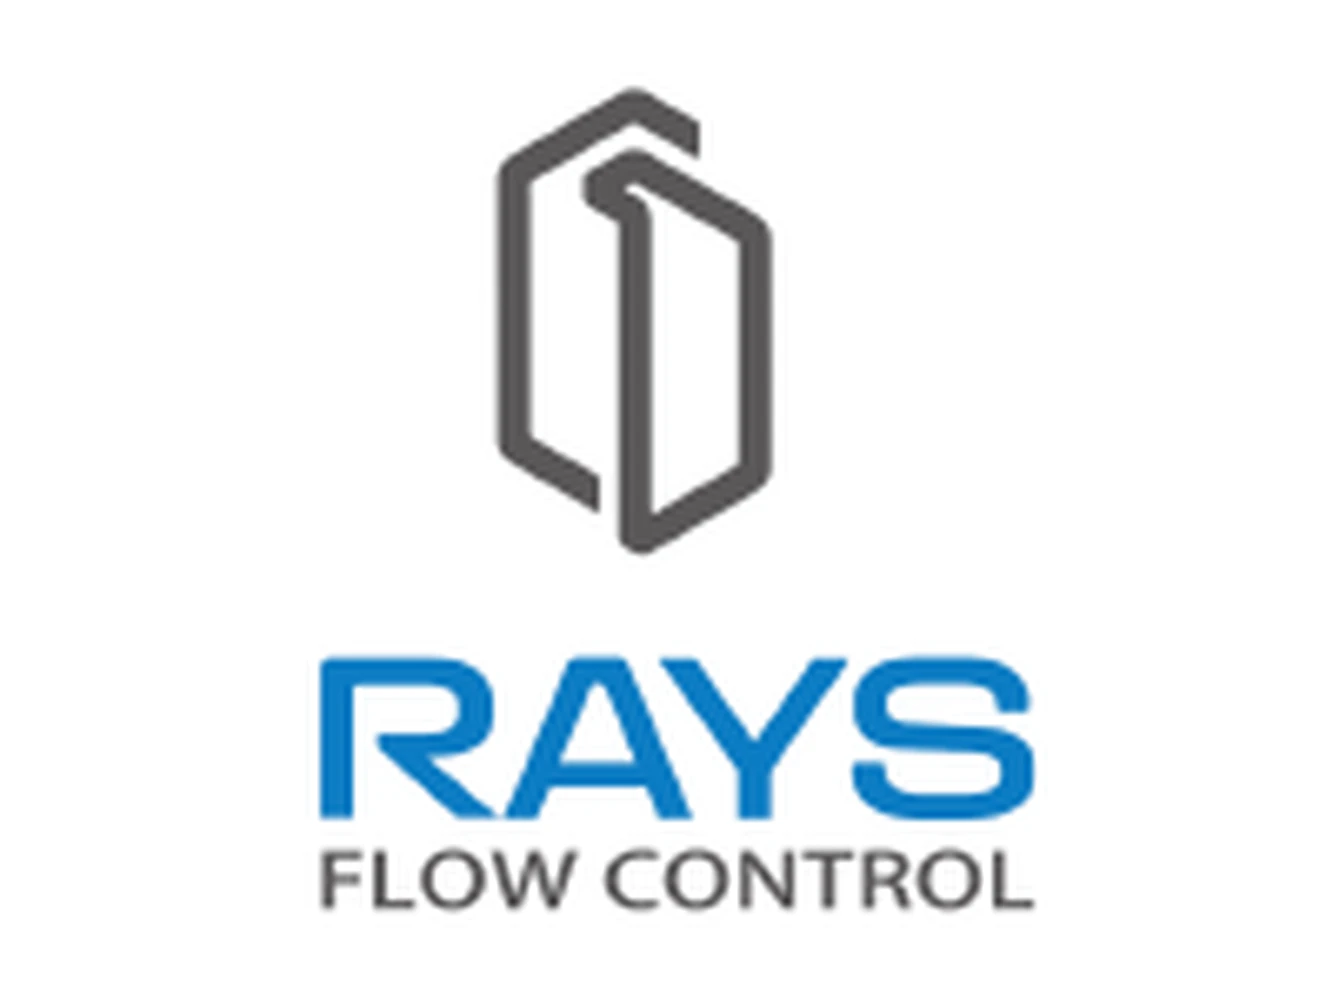 Rays logo